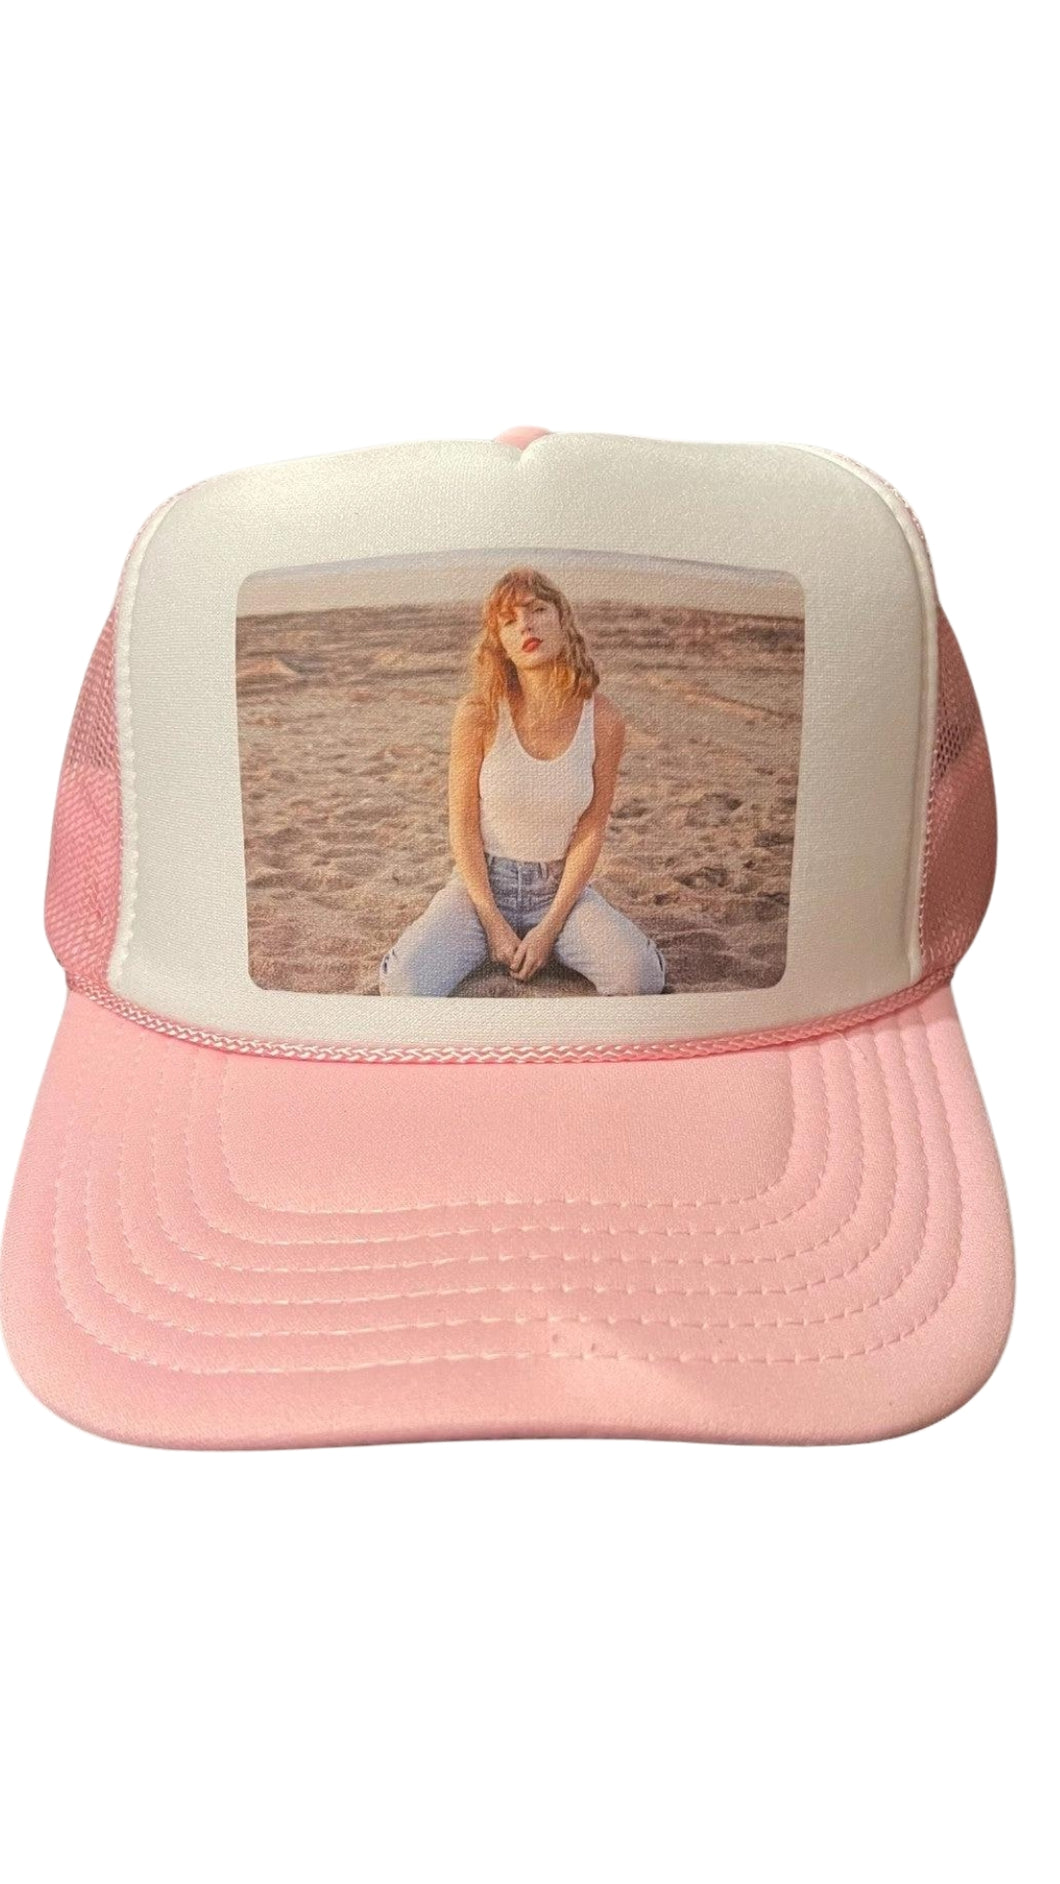 Swiftie Era Trucker Hat